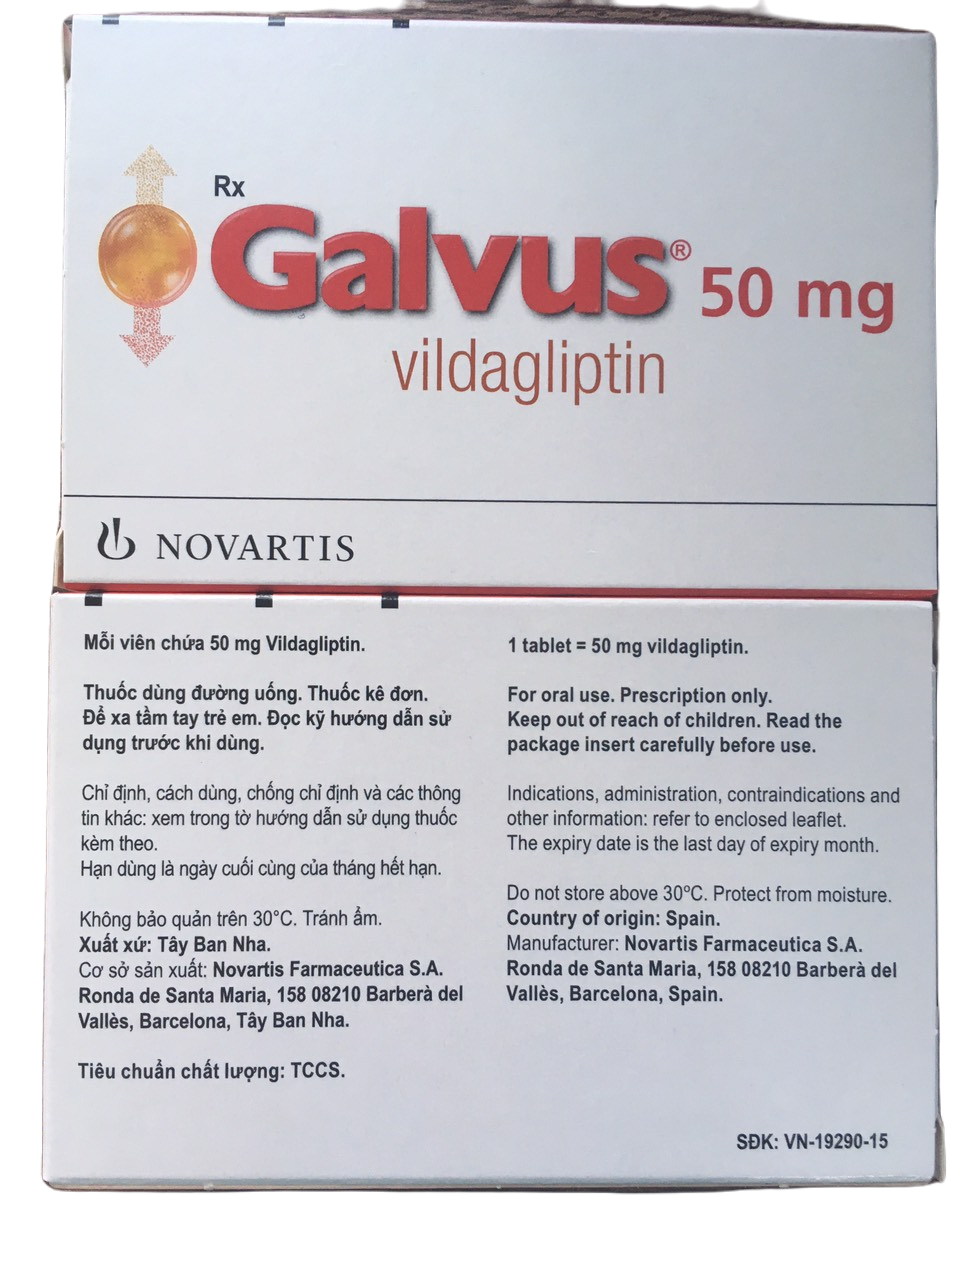 Galvus 50mg (Vildagliptin) Novartis (H/28v)